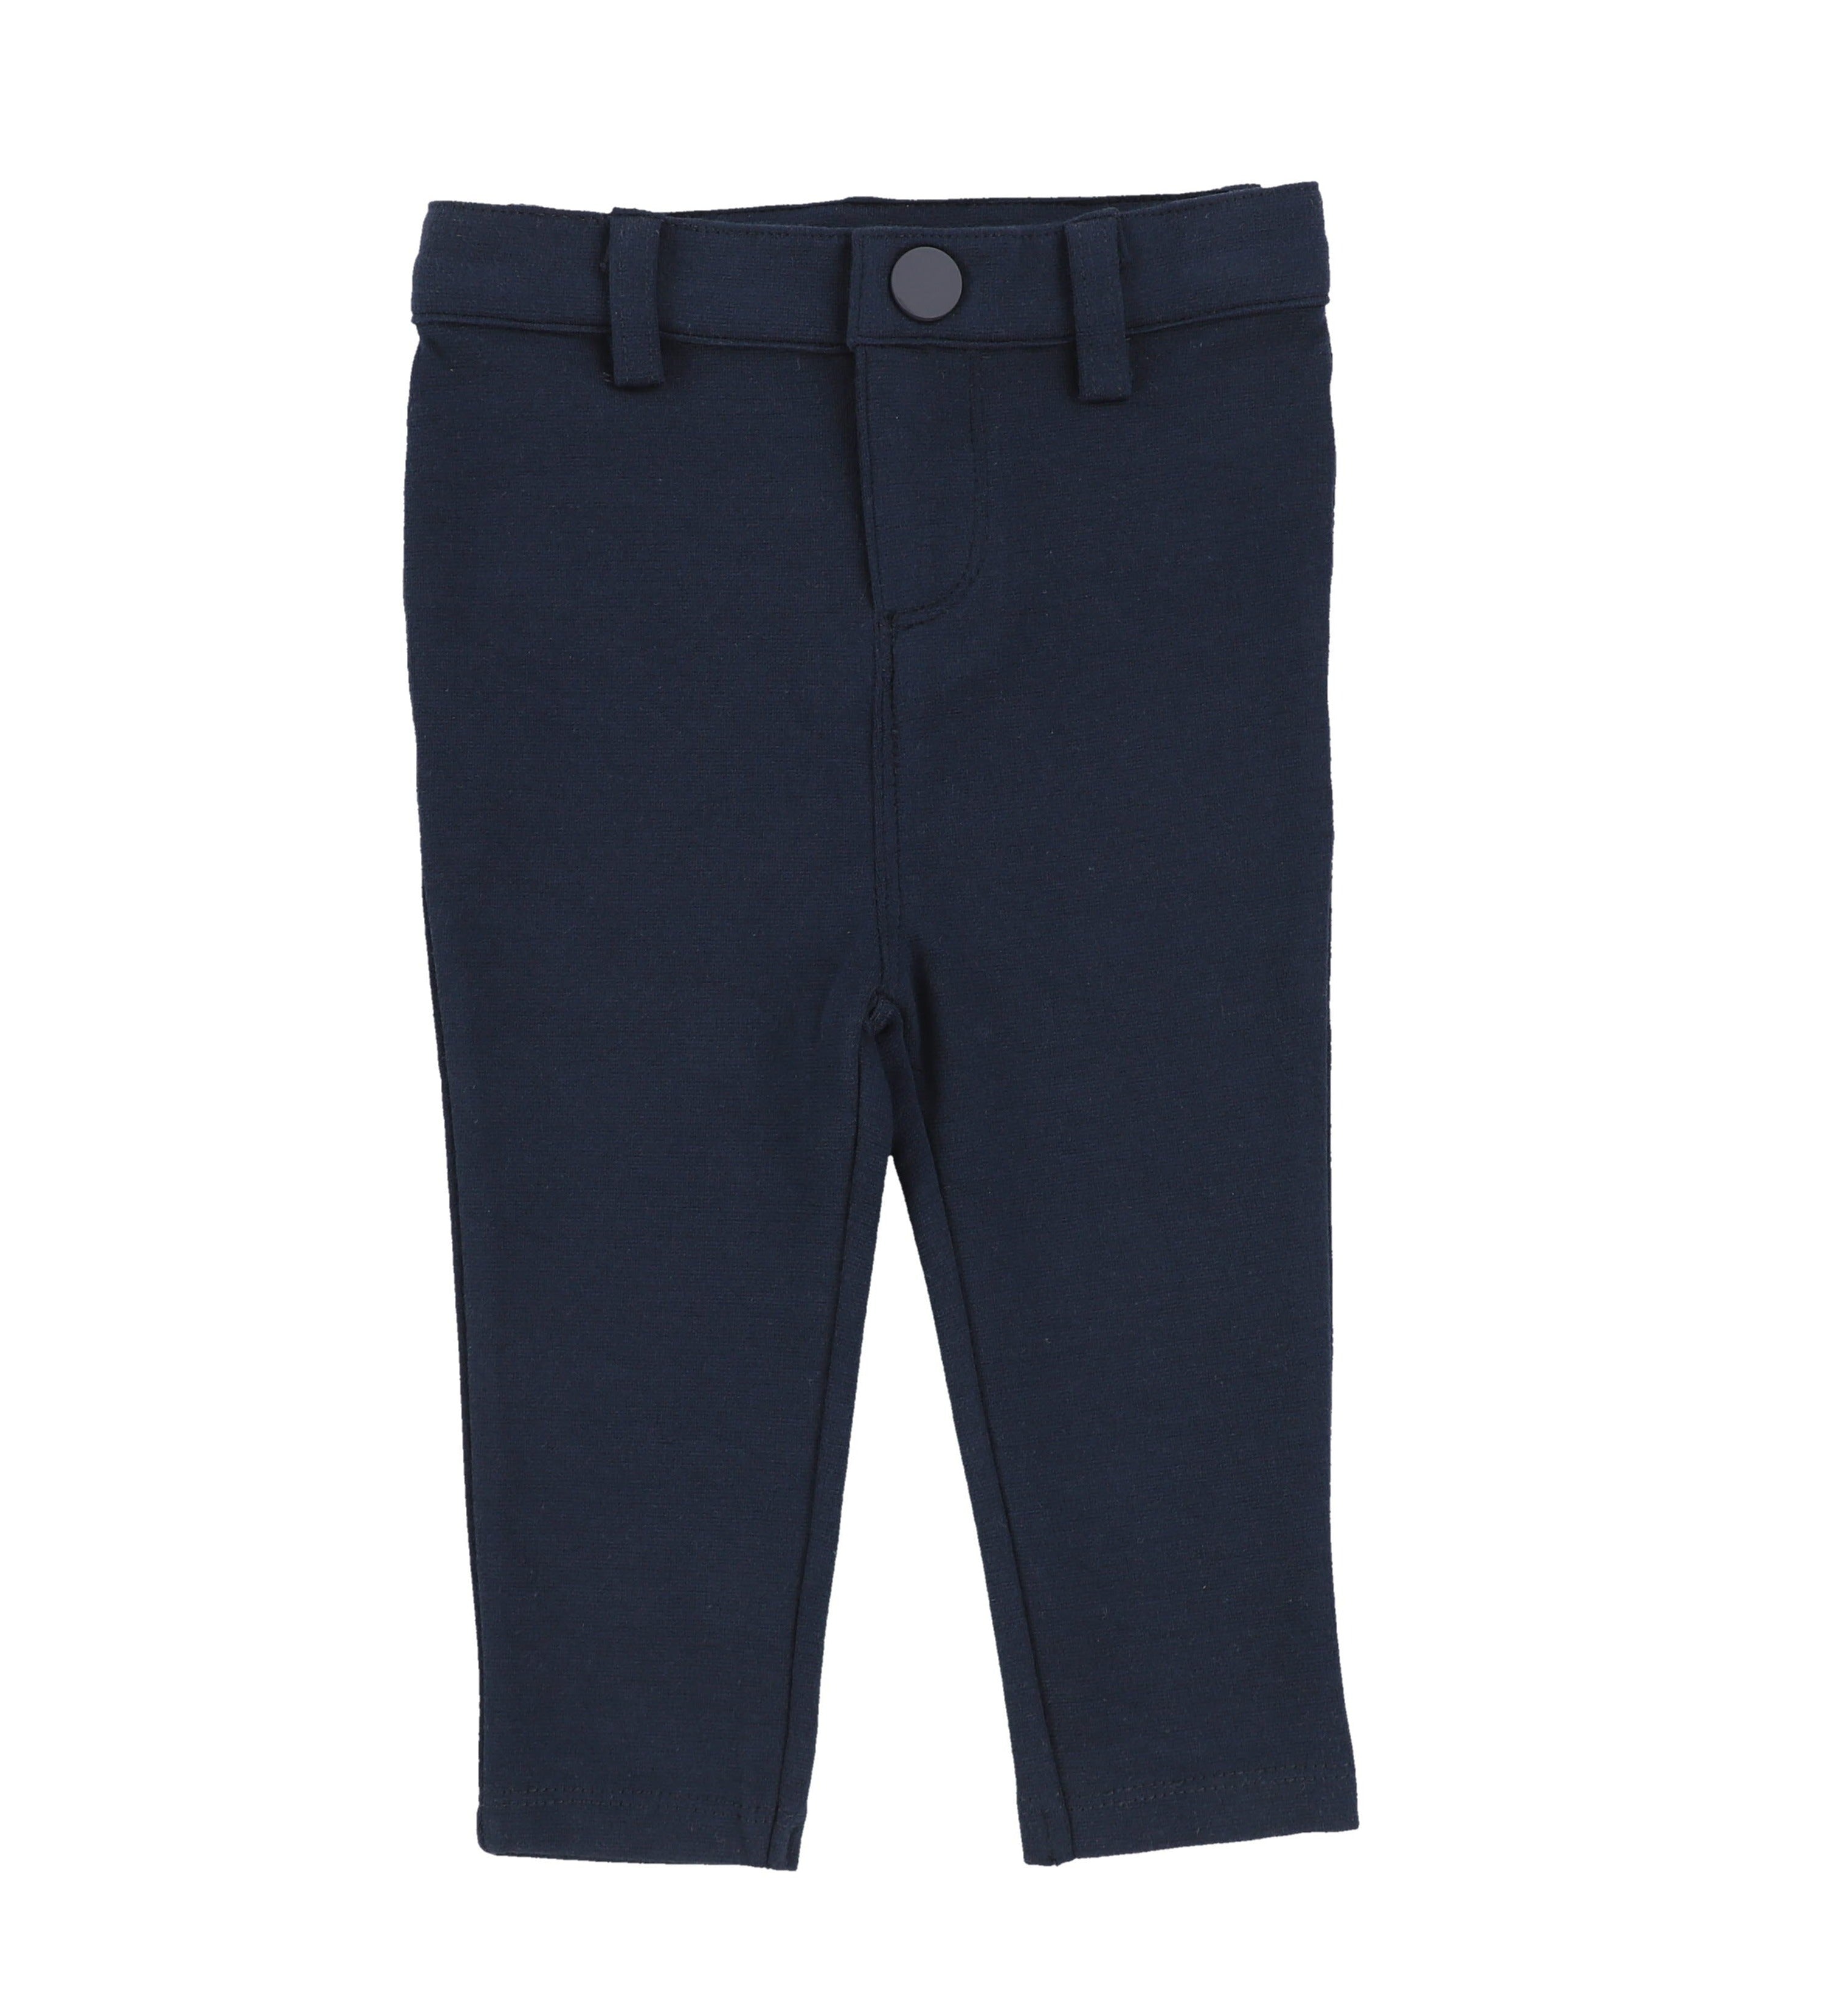 BEGELM Knit Short Pants NAVY - パンツ